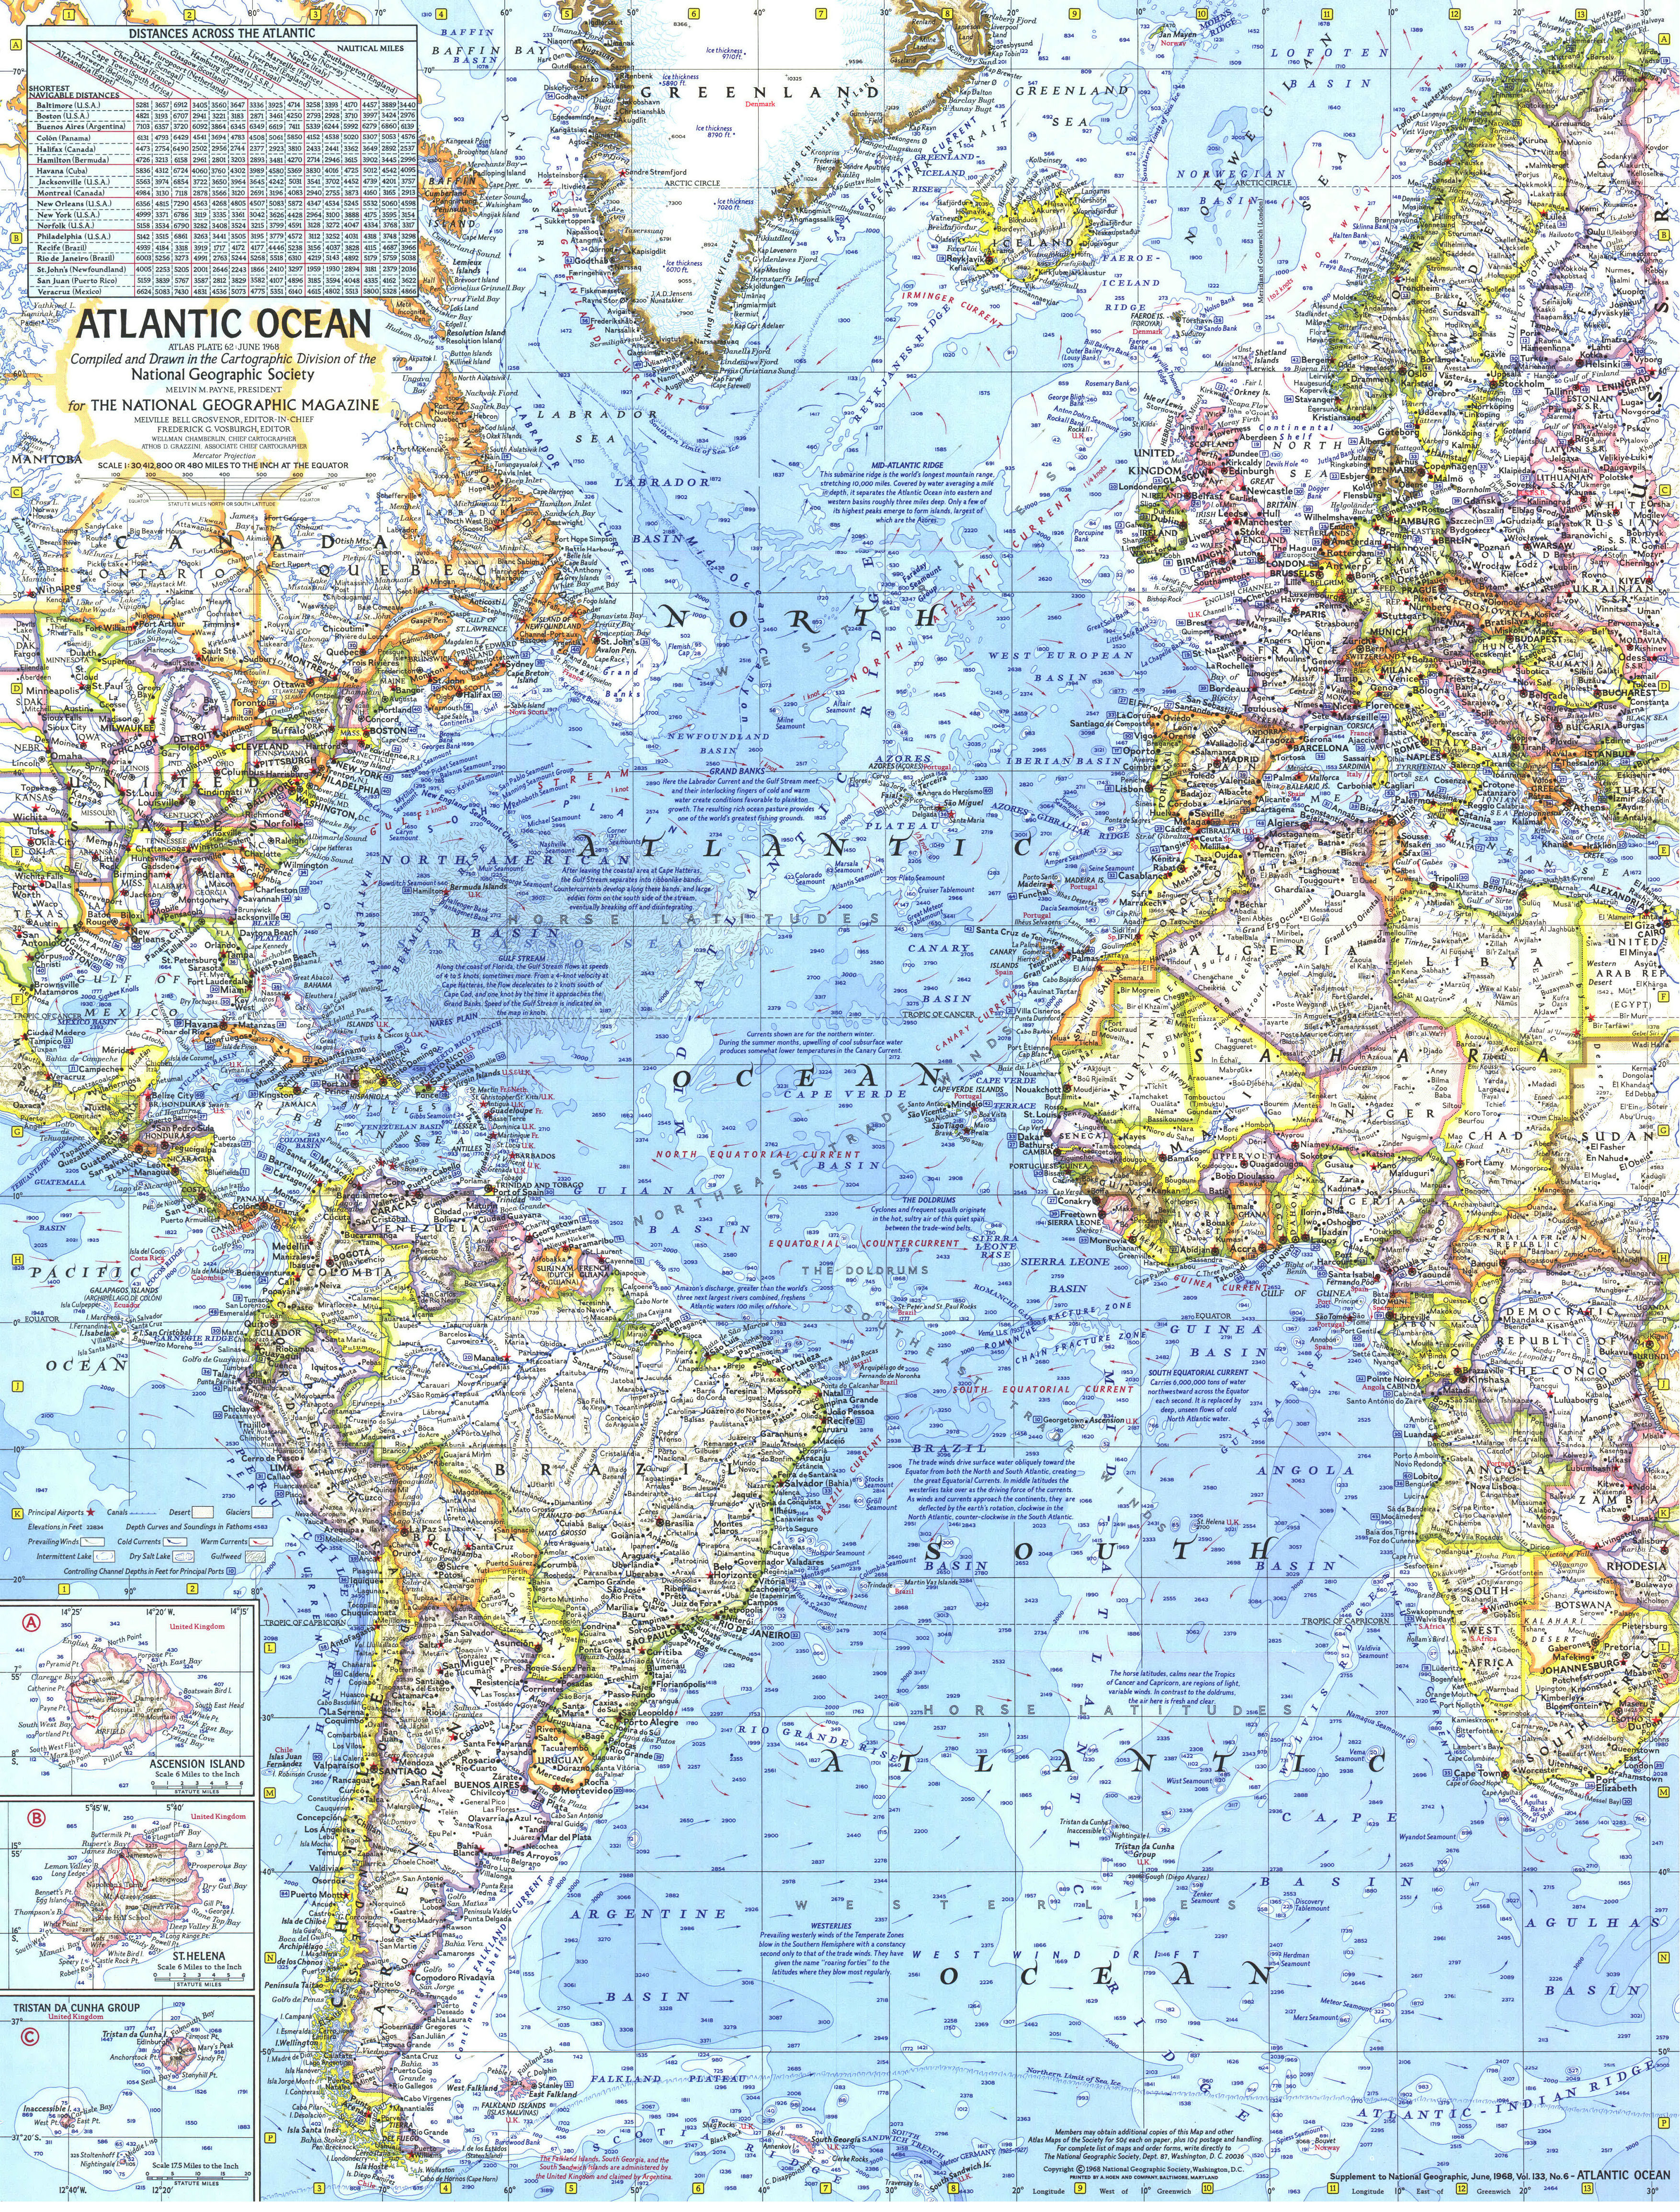 MAPS - National Geographic - Atlantic Ocean 1968.jpg